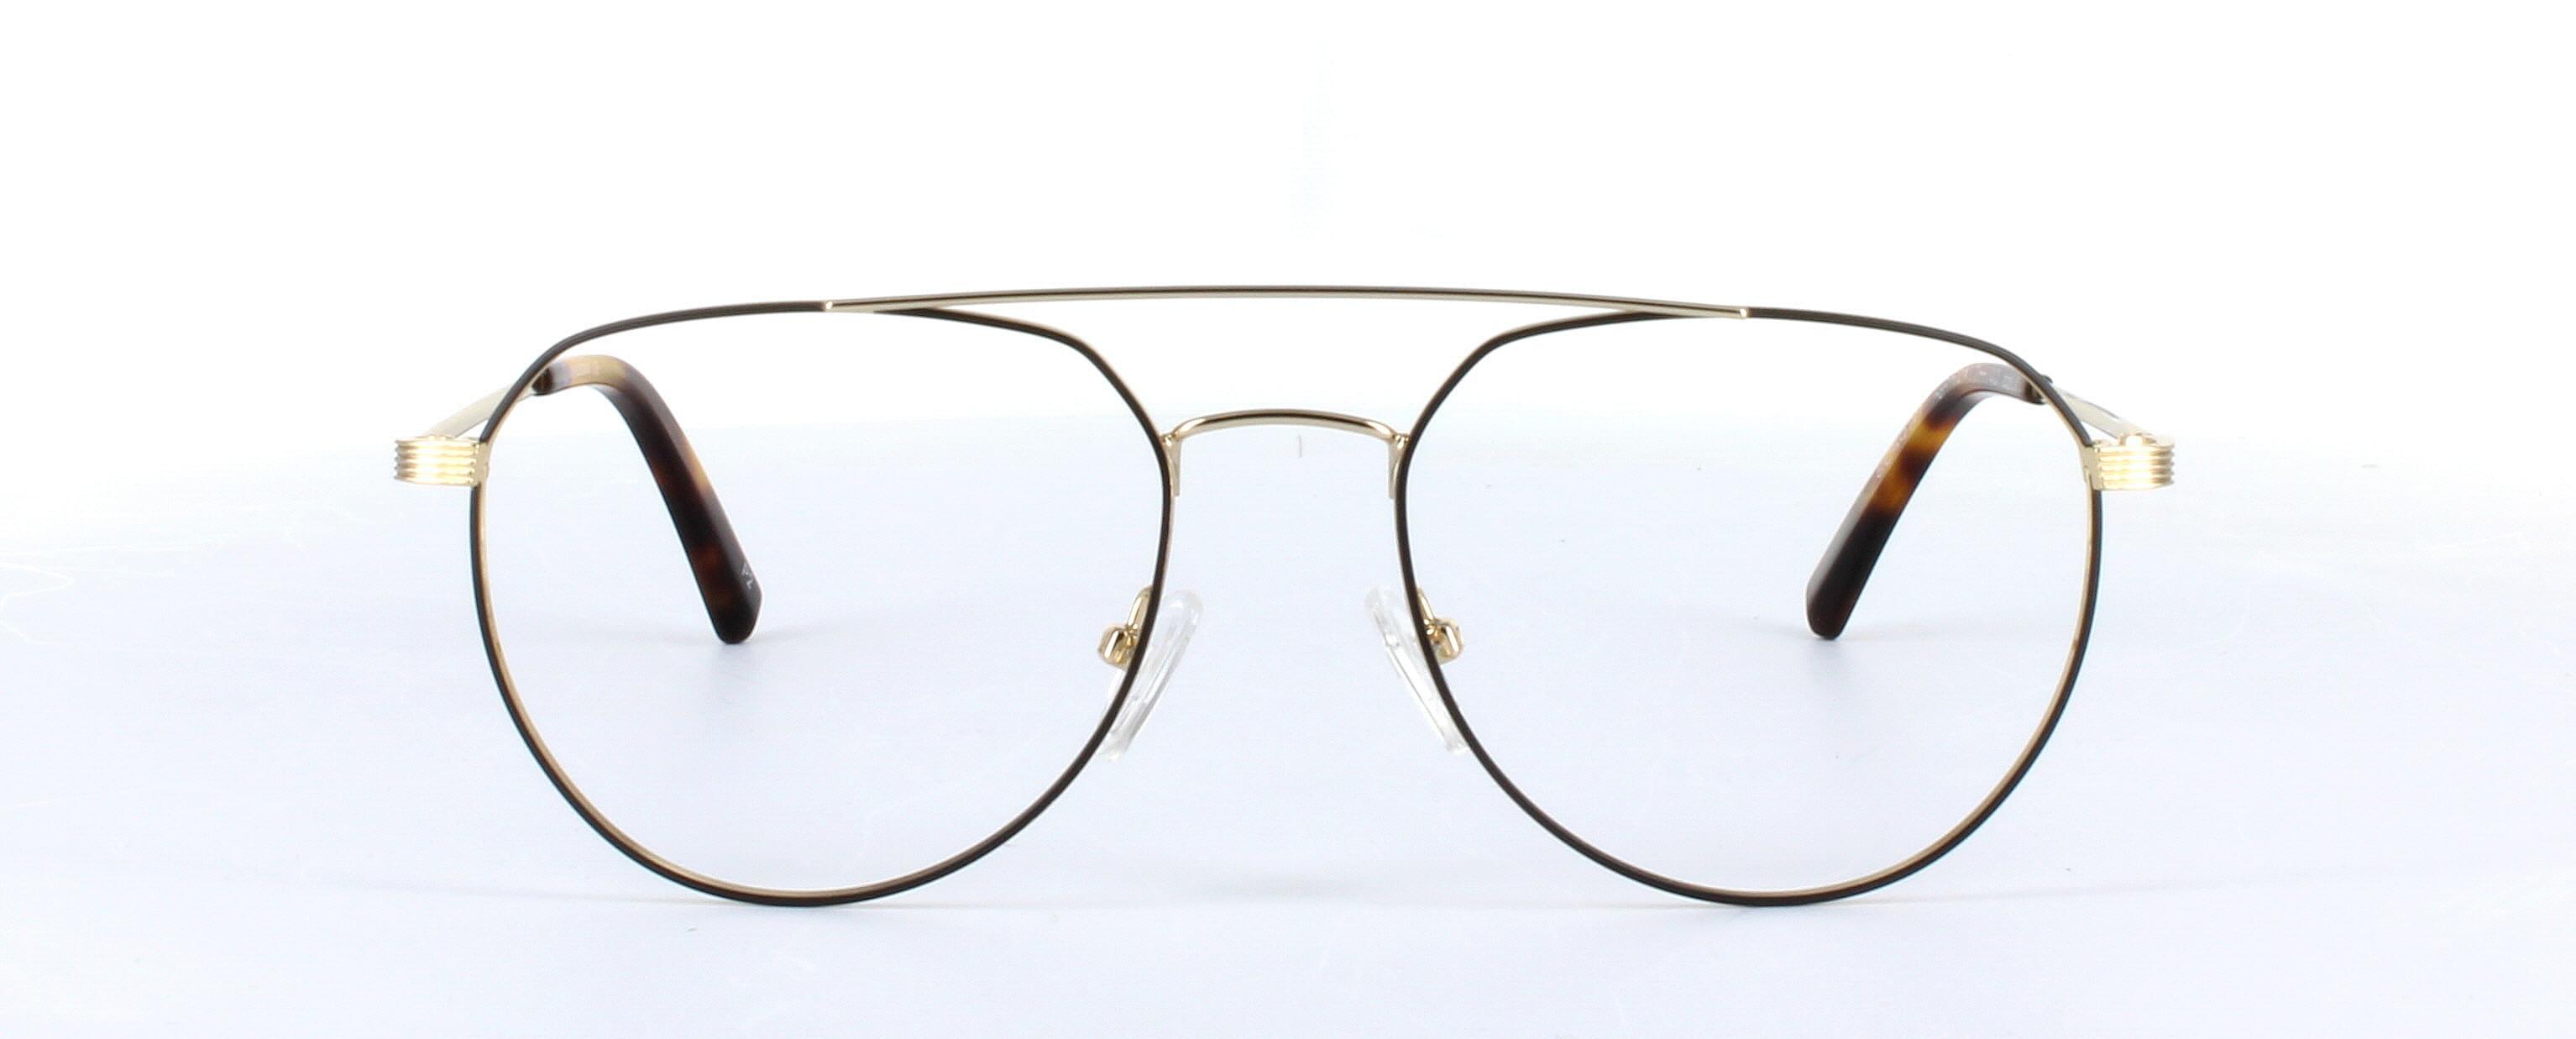 Eyecroxx 597 Black and Gold Full Rim Aviator Metal Glasses - Image View 5